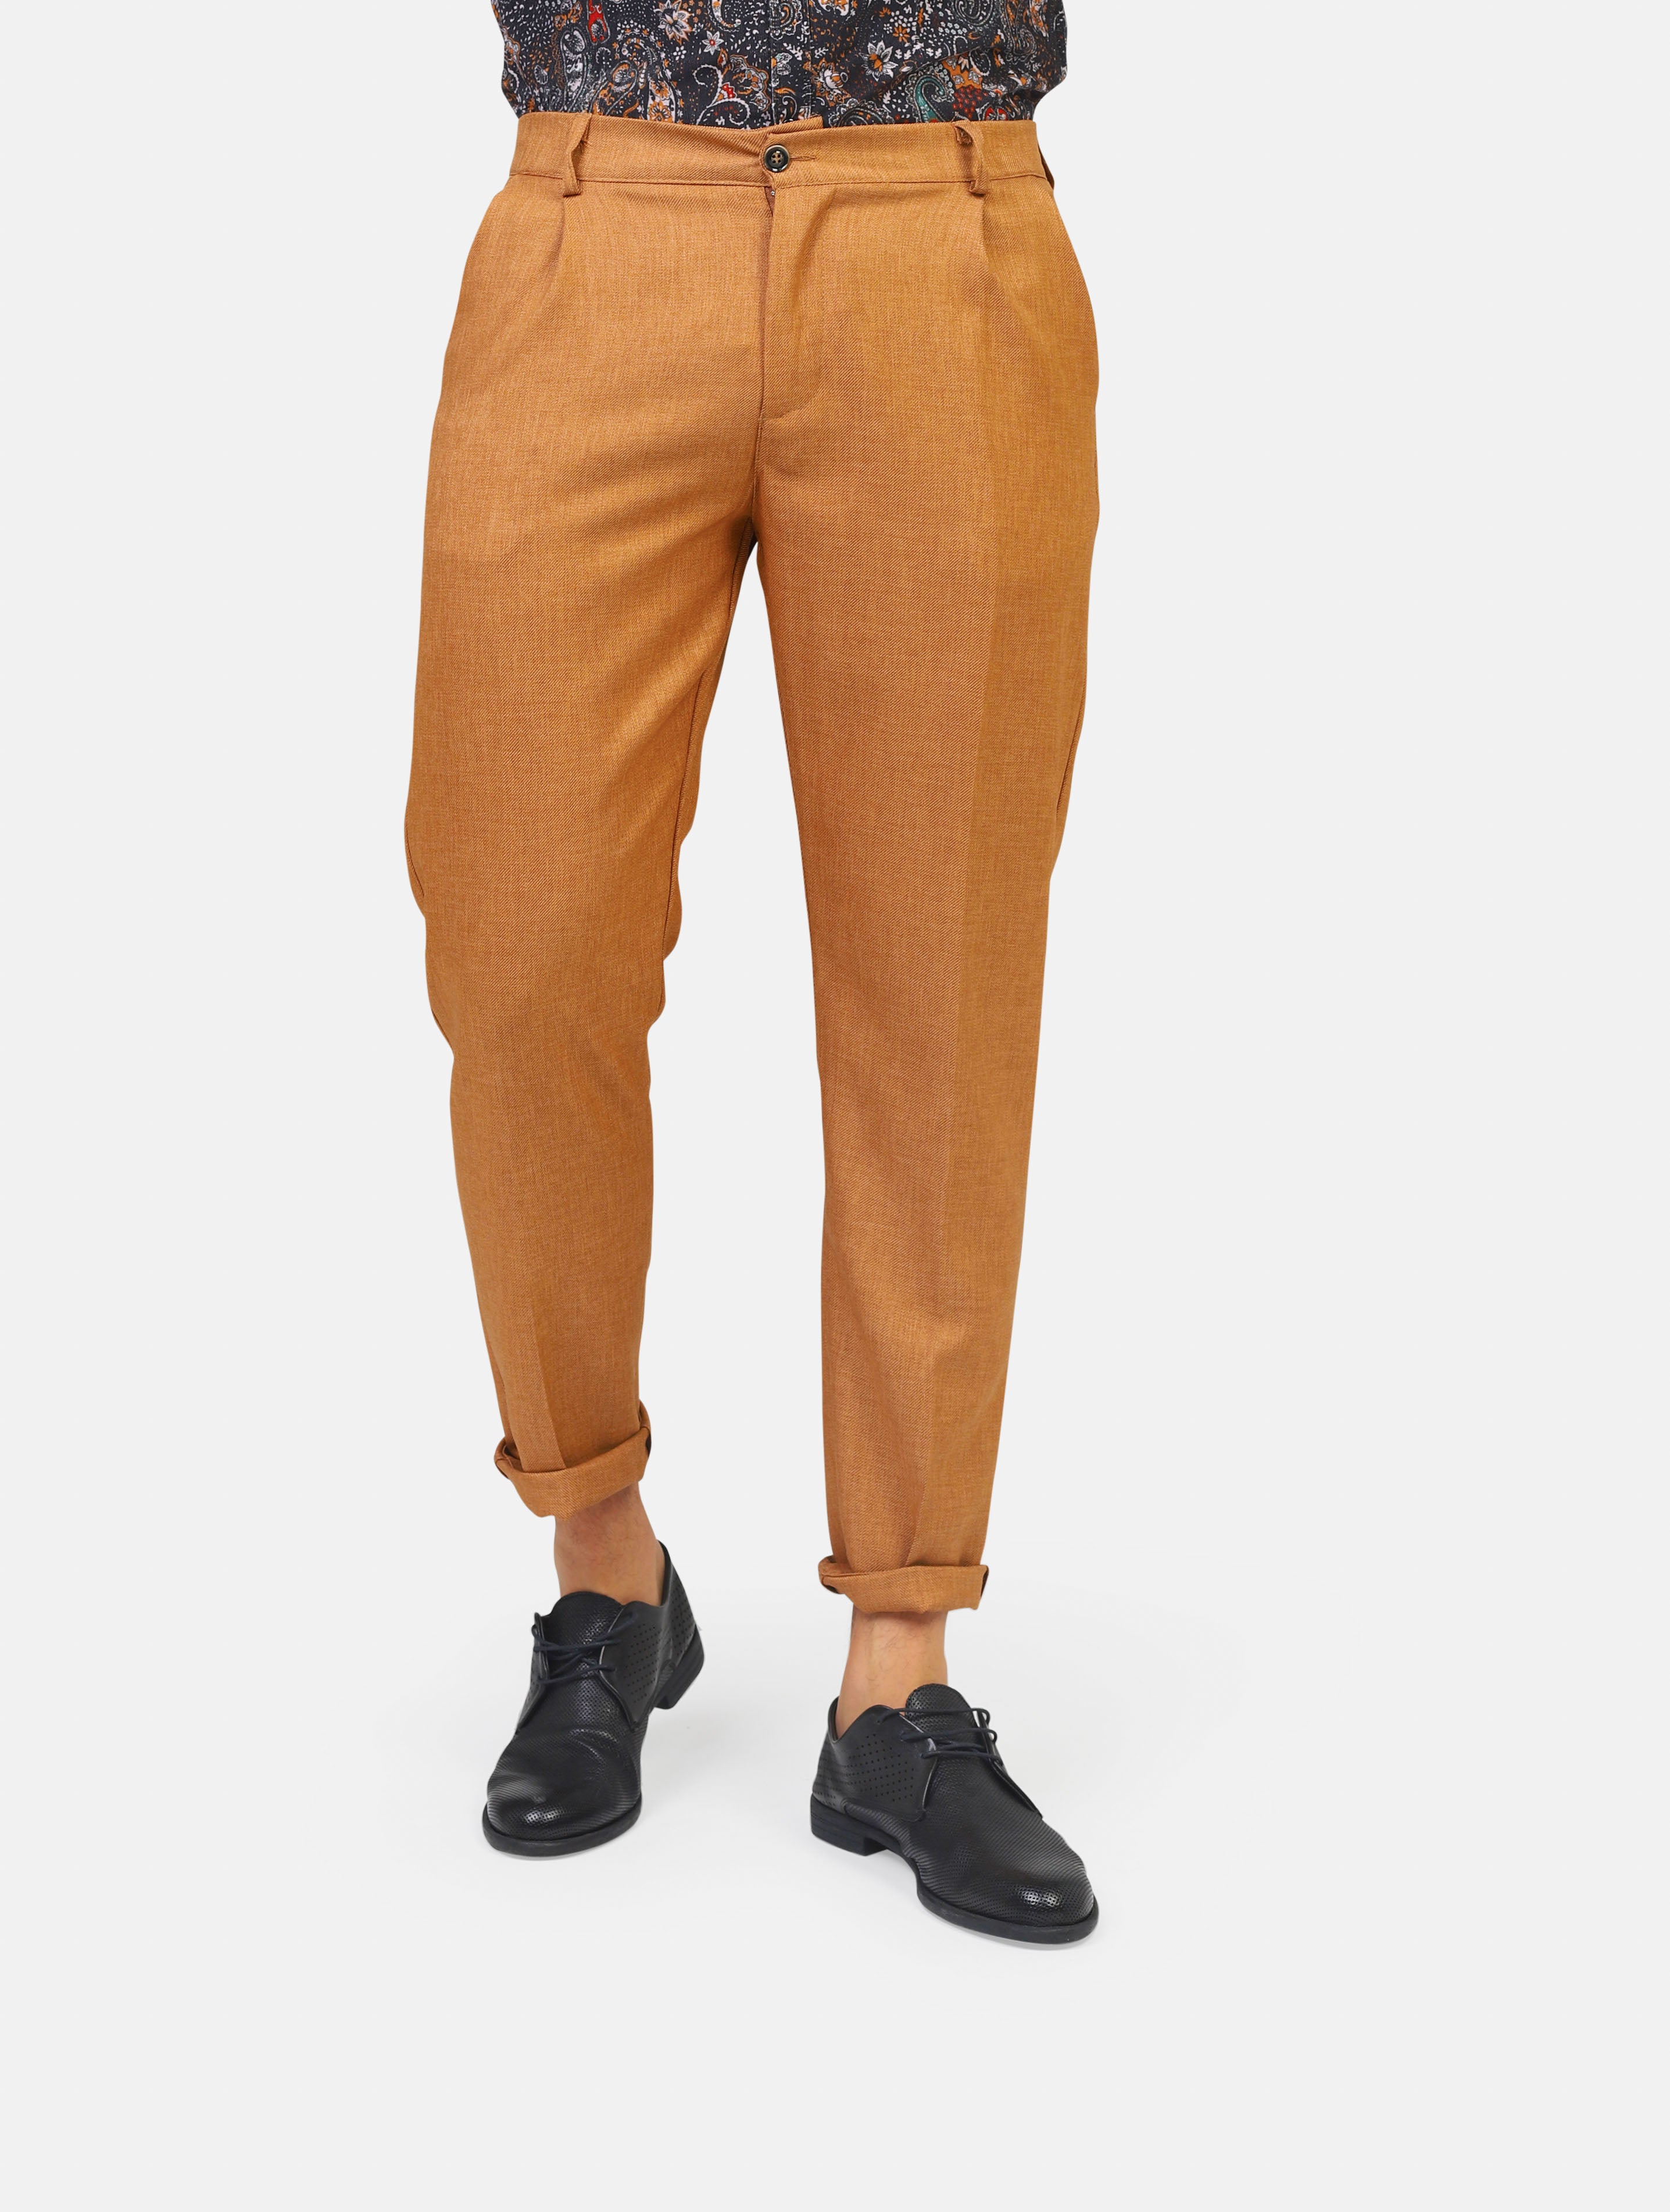 pantalone #JOB - 55426BROWN